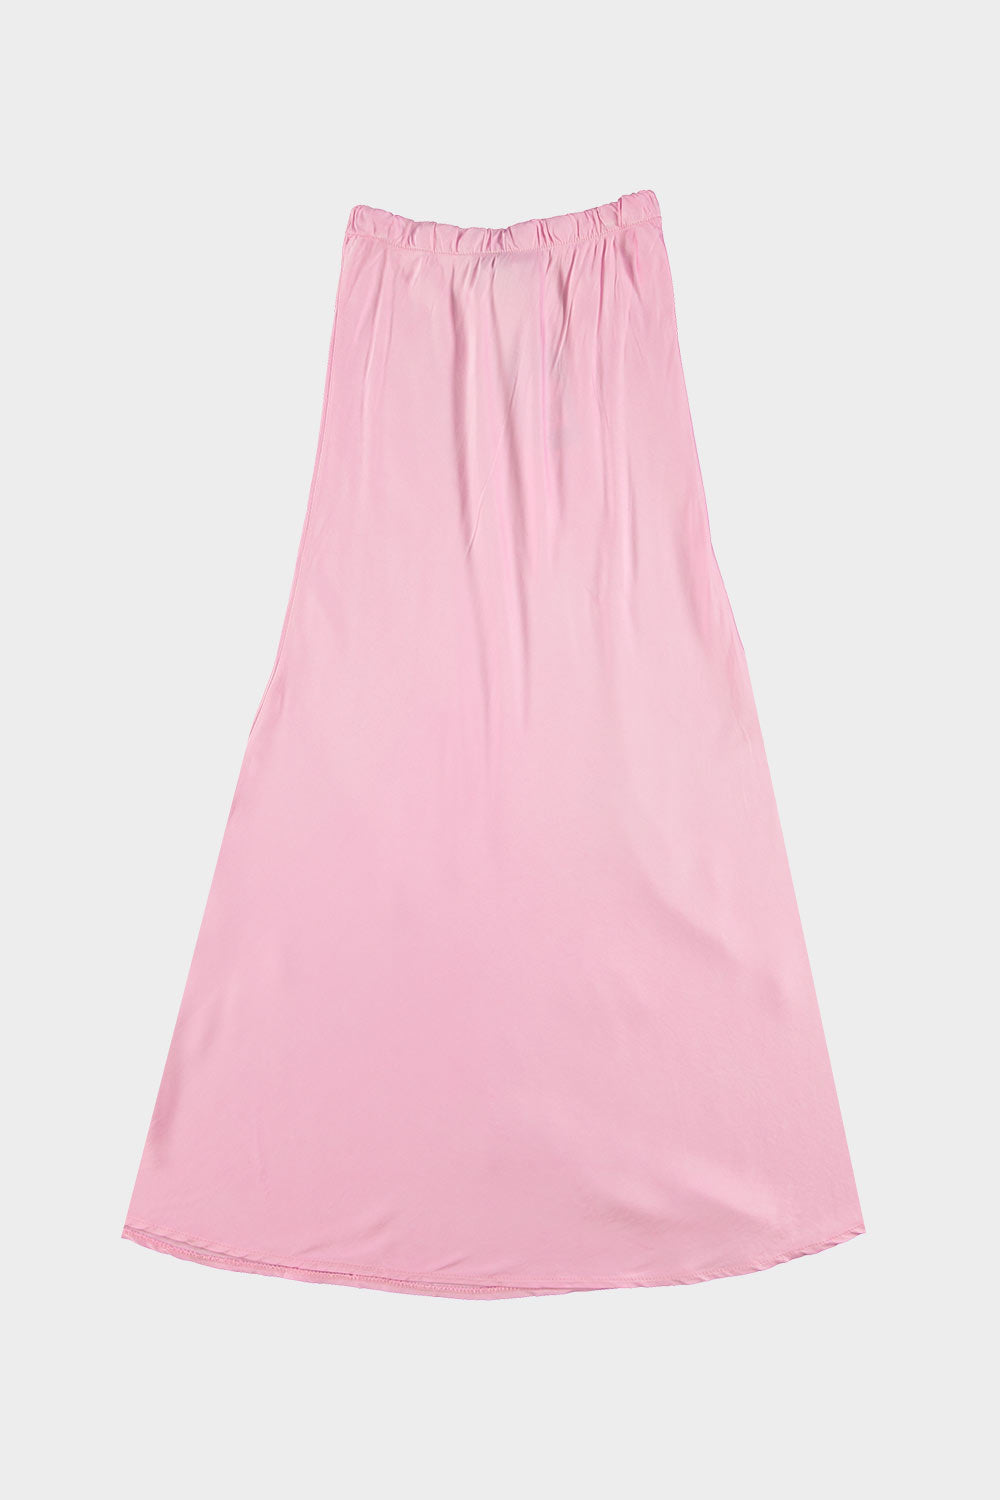 Skirt pink